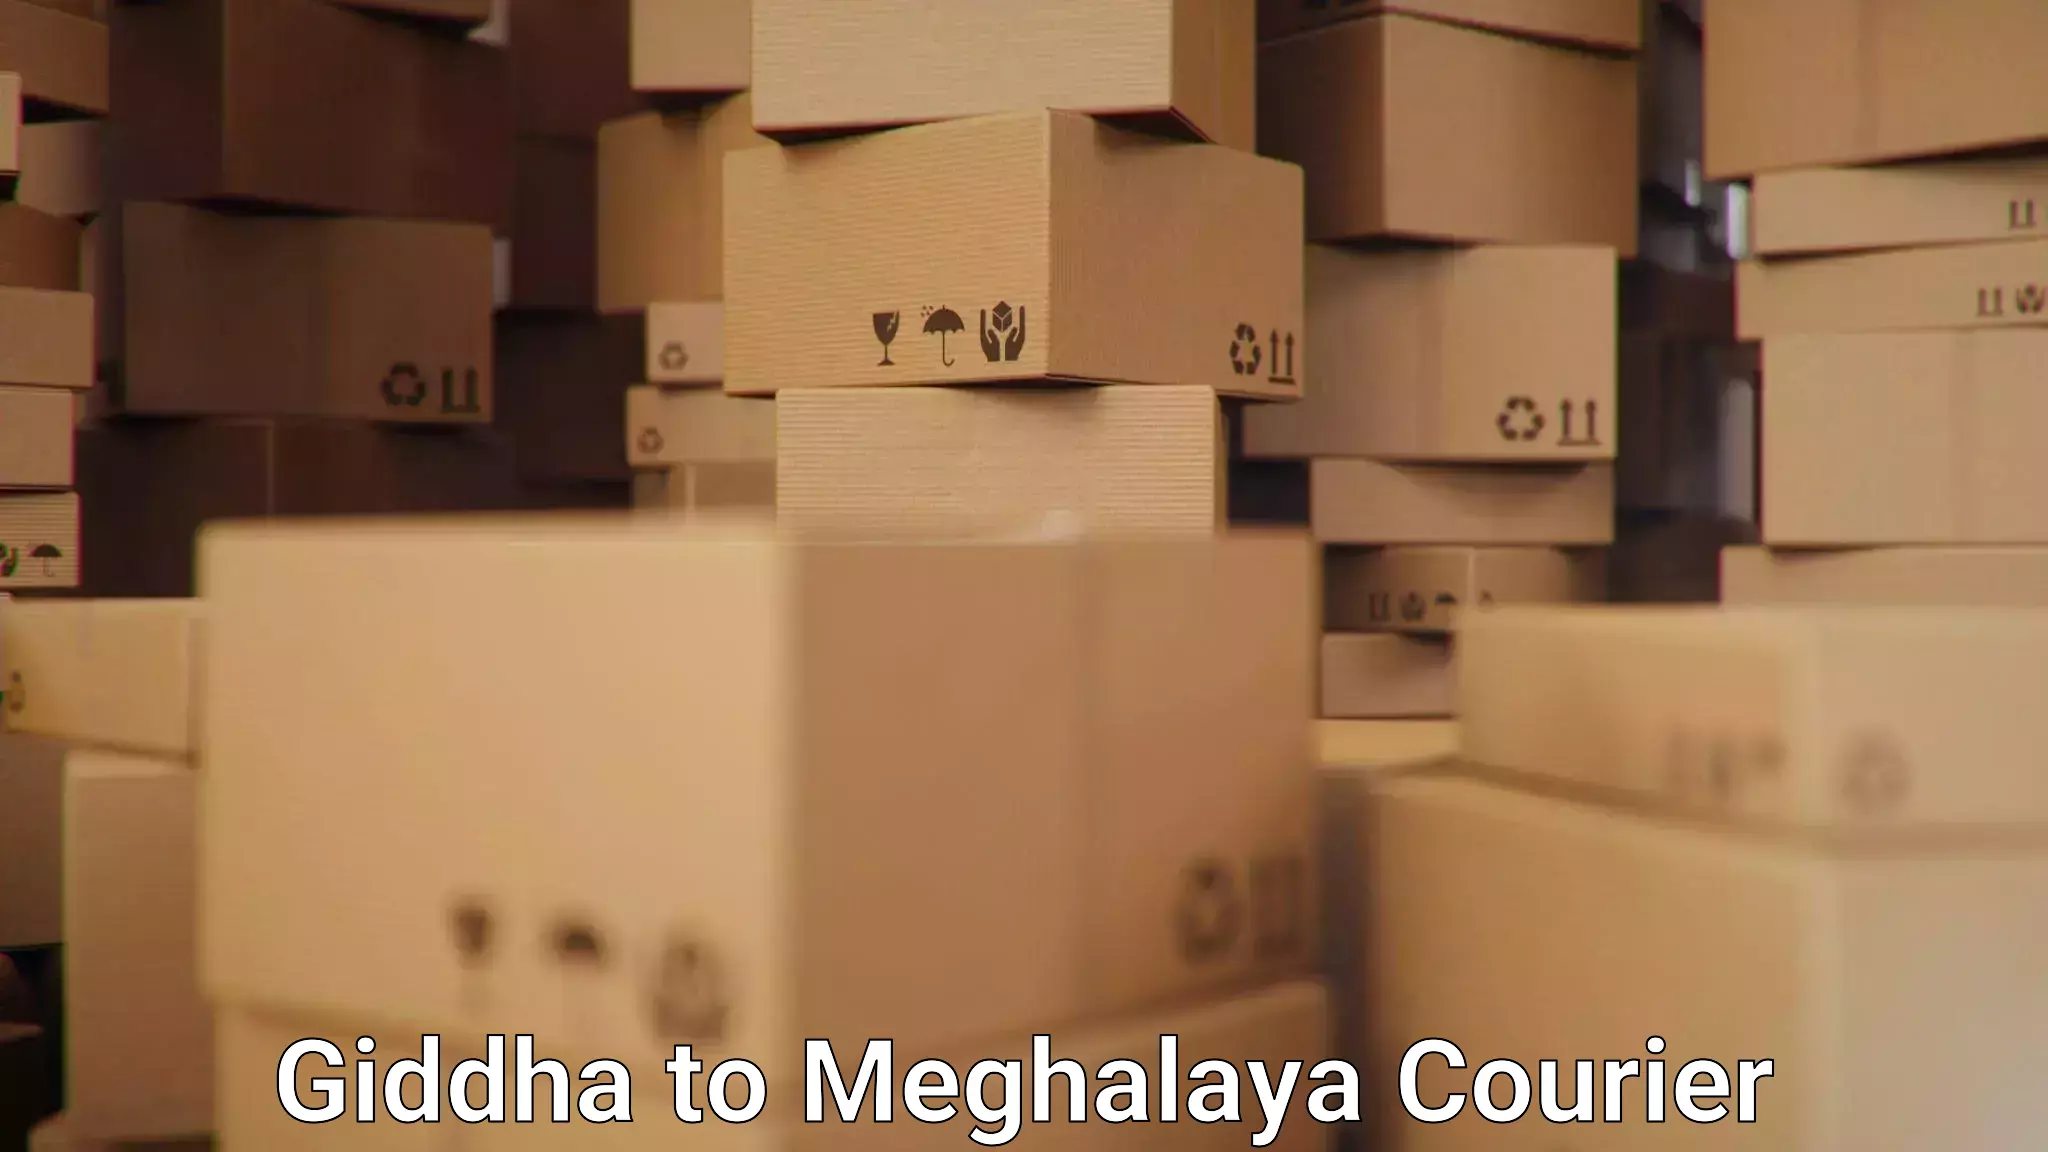 Courier service comparison in Giddha to Cherrapunji